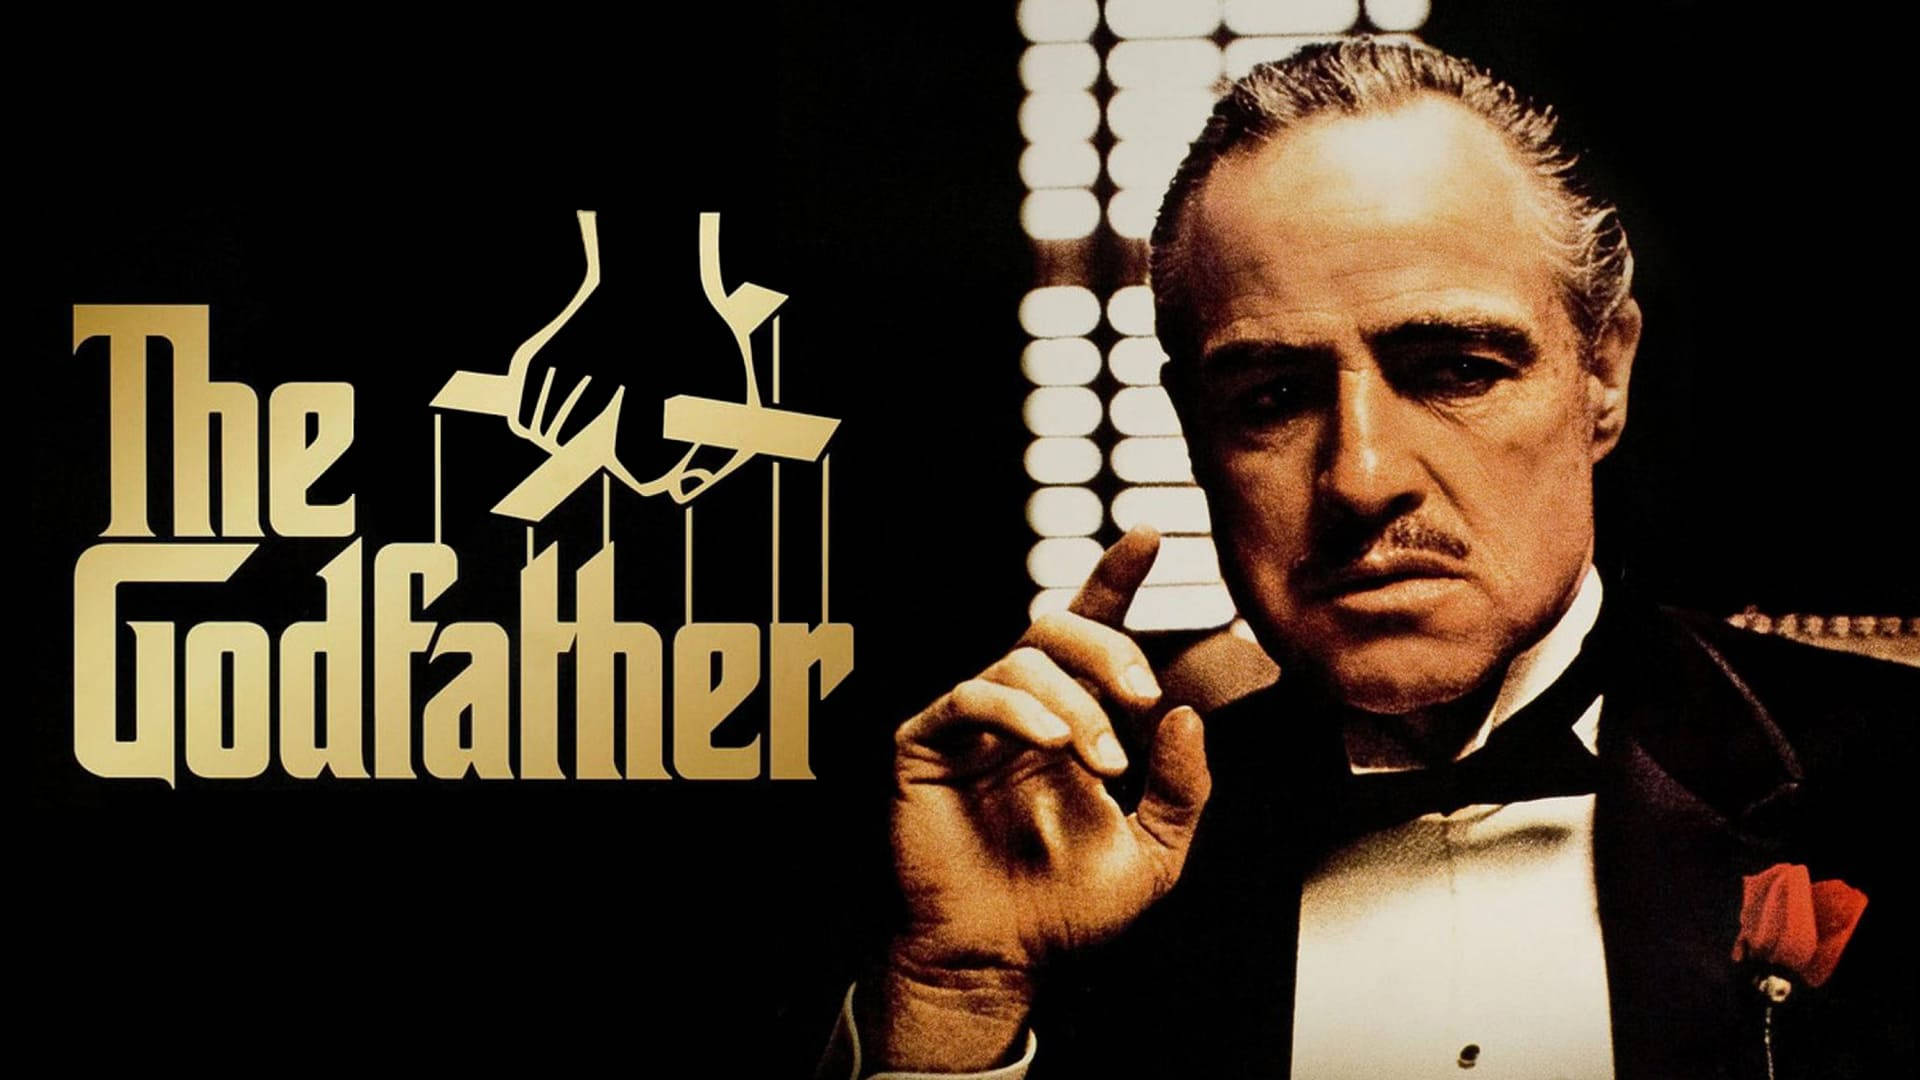 Marlonbrando The Godfather Poster (in Swedish): Marlon Brando The Godfather Affisch. Wallpaper